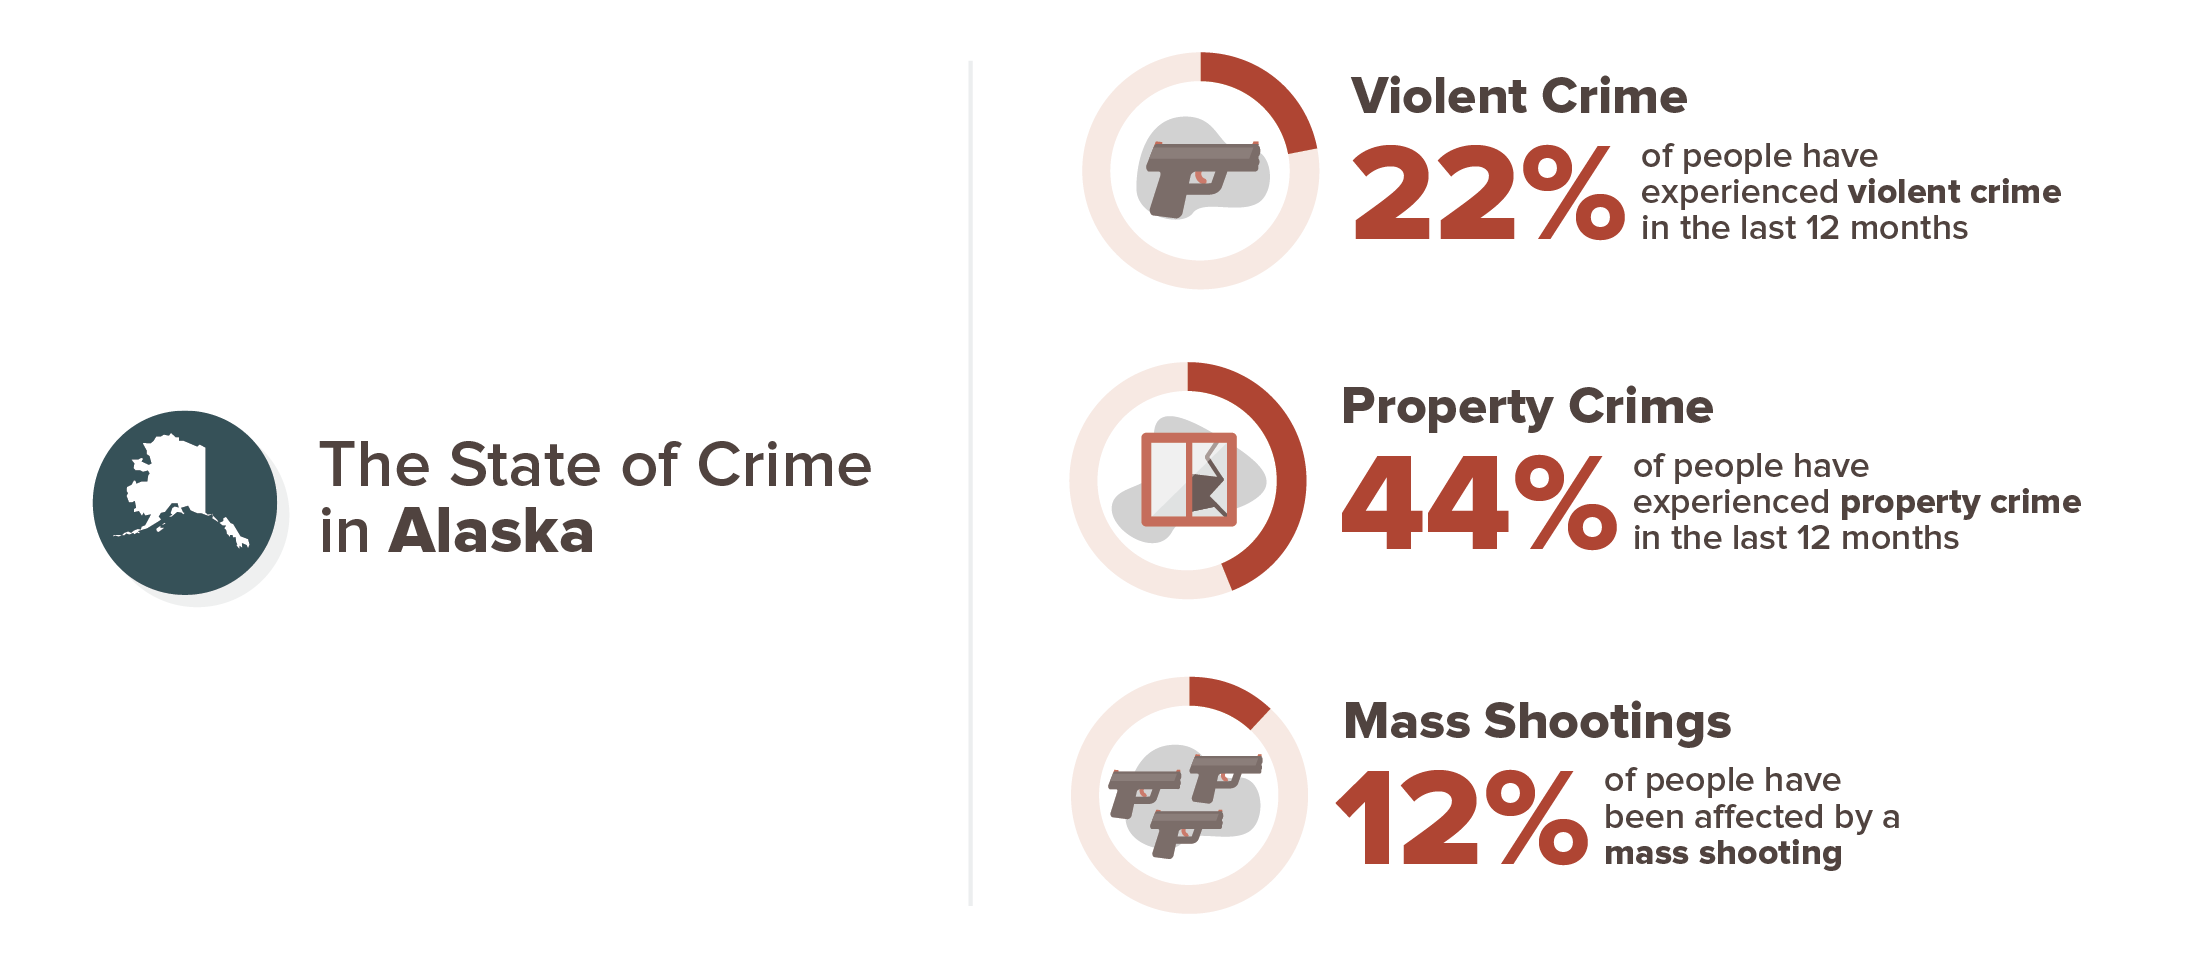 Alaska experience with crime infographic; 22% violent crime, 44% property crime, 12% mass shooting